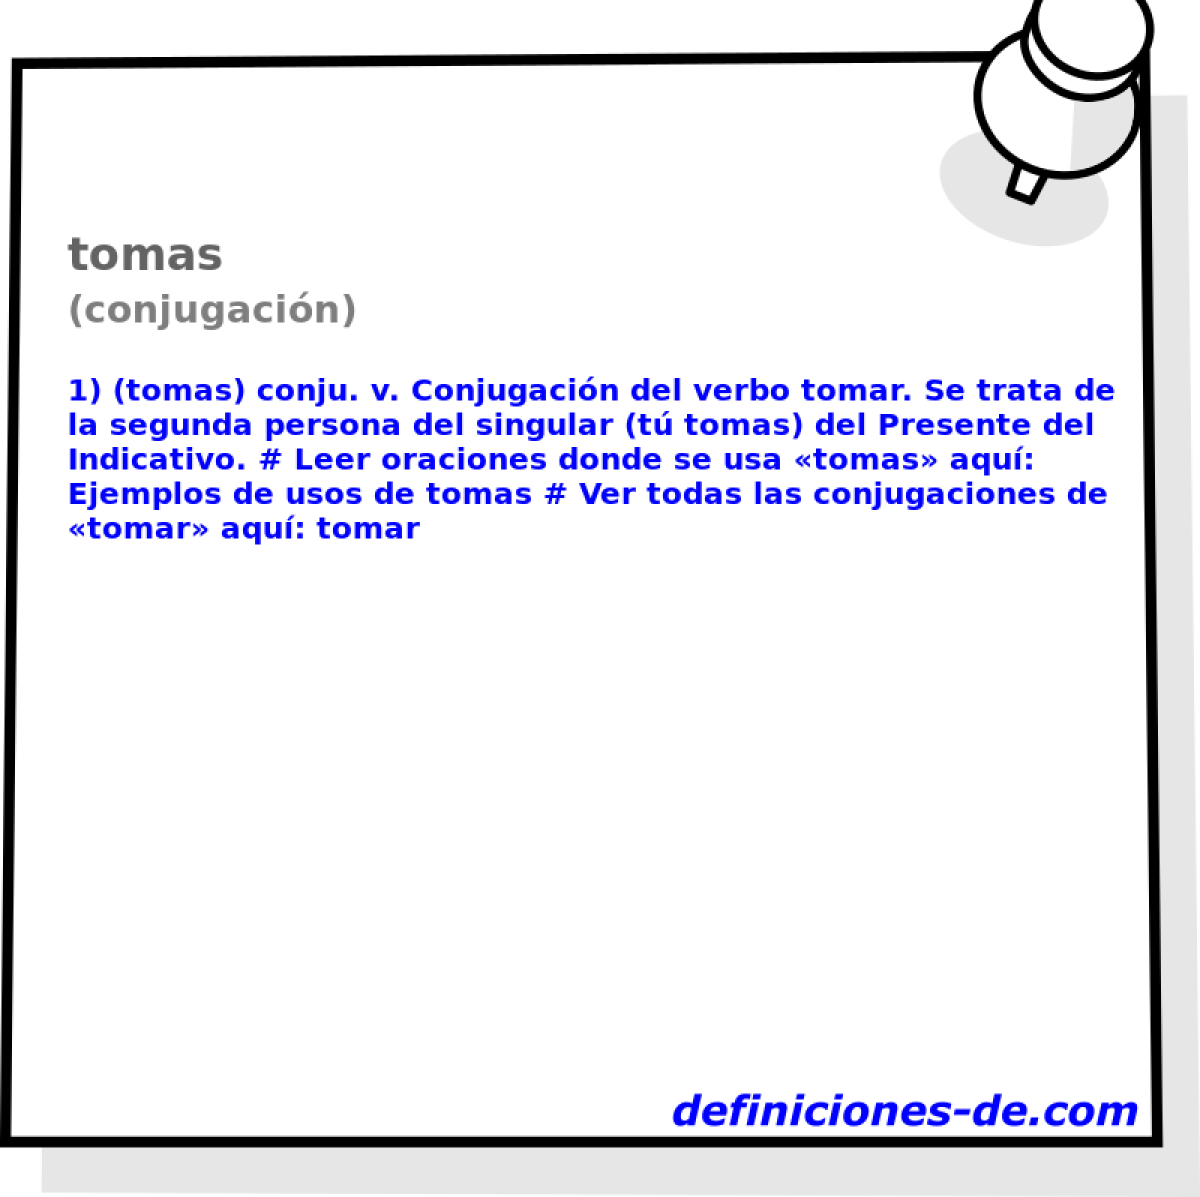 tomas (conjugacin)